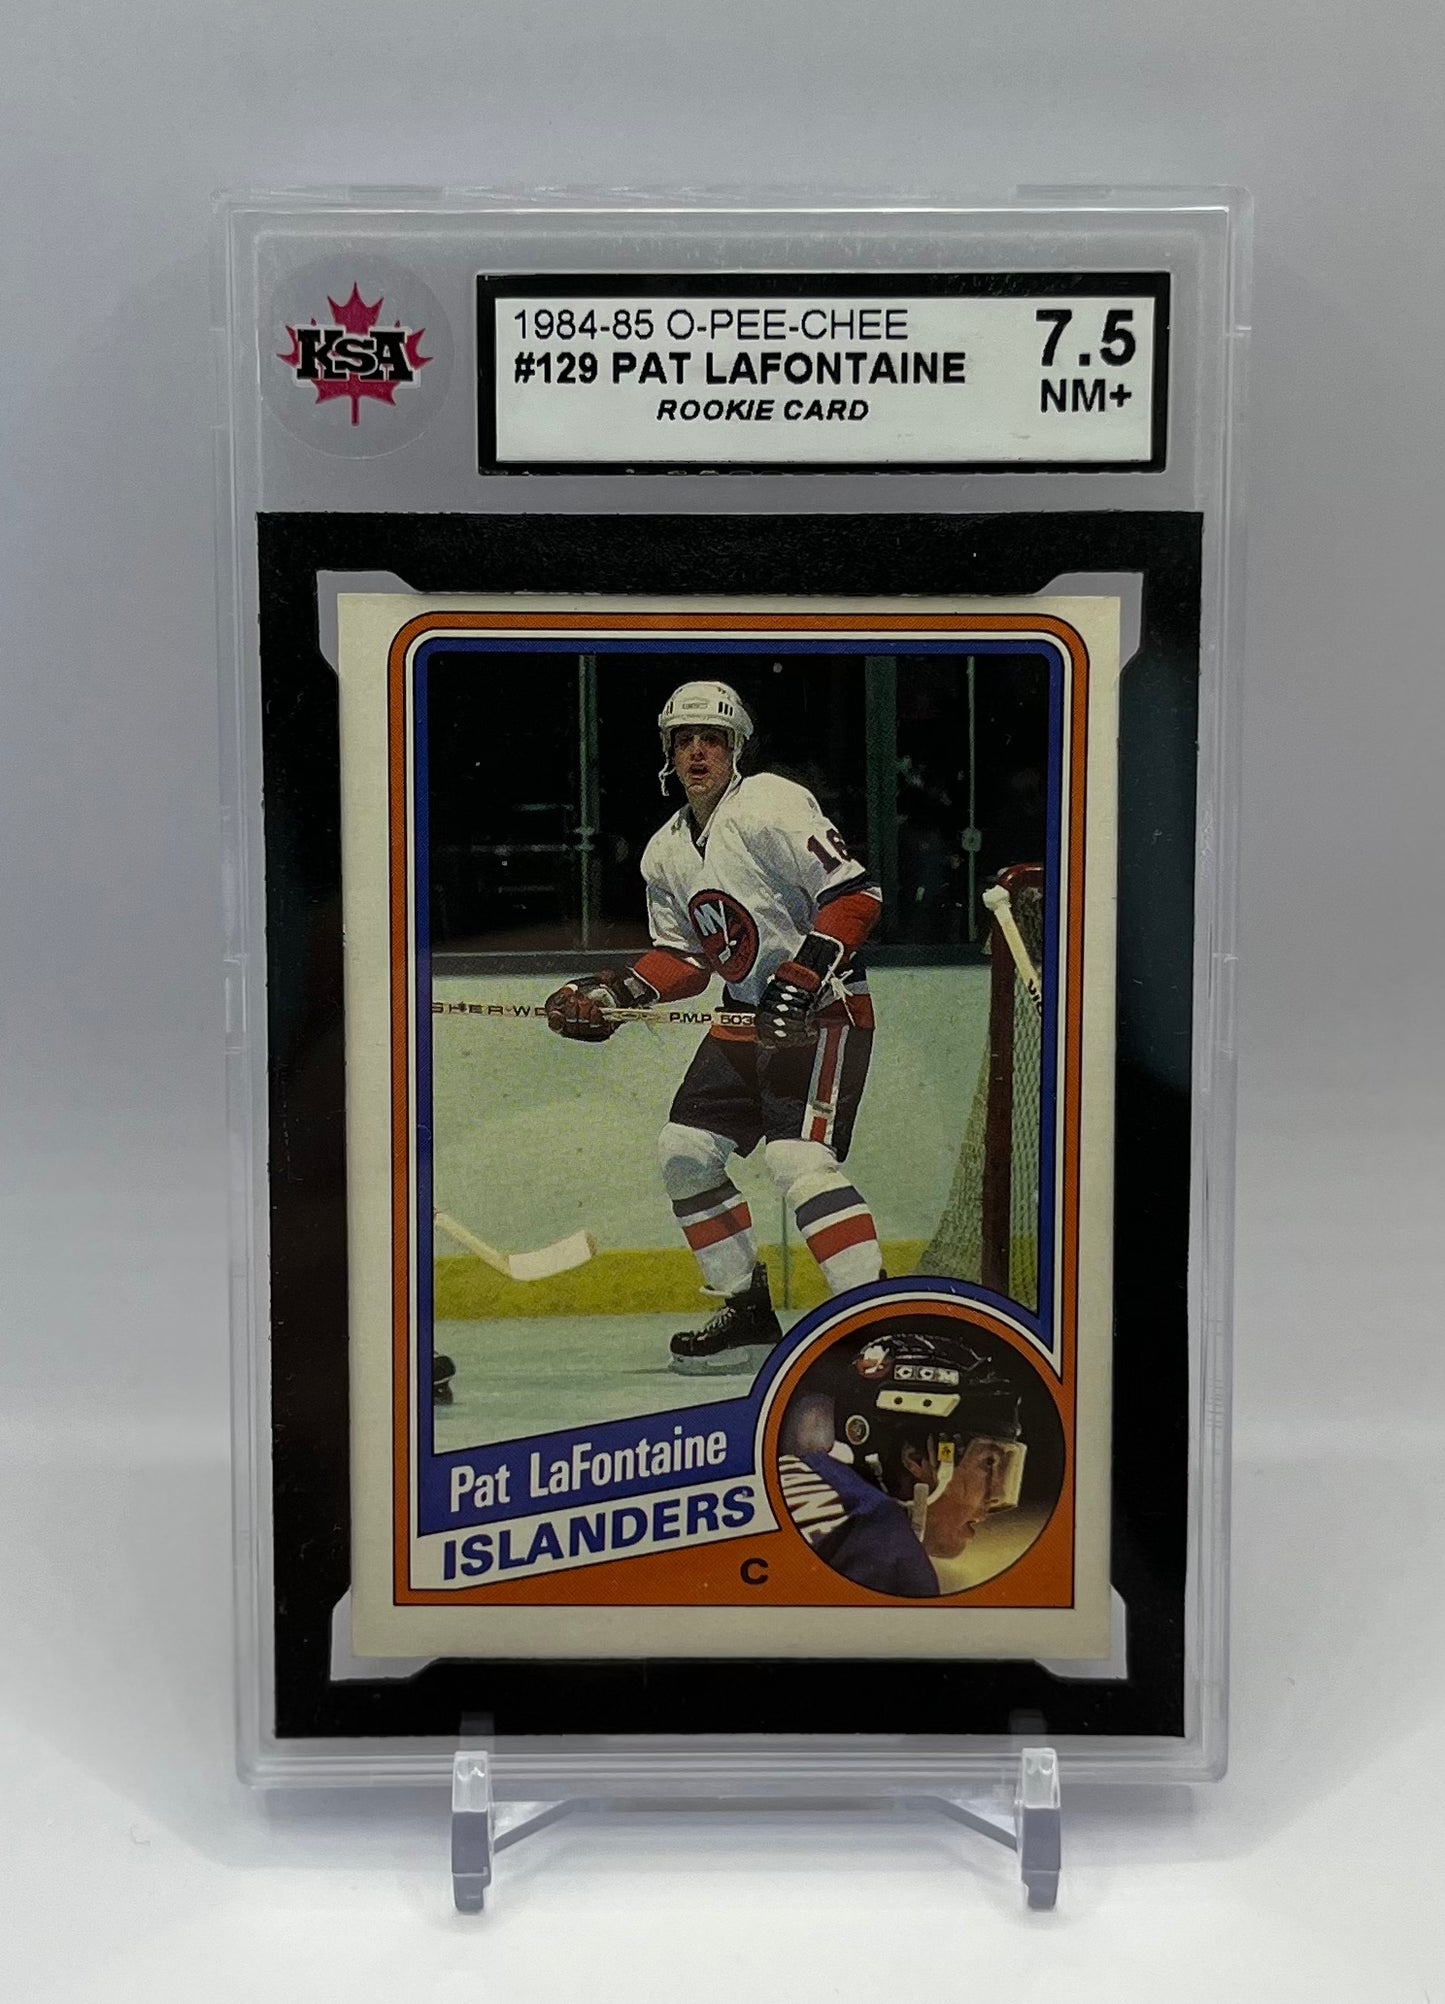 1984-85 #129 PAT LAFONTAINE O-PEE-CHEE - KSA 7.5 NM+